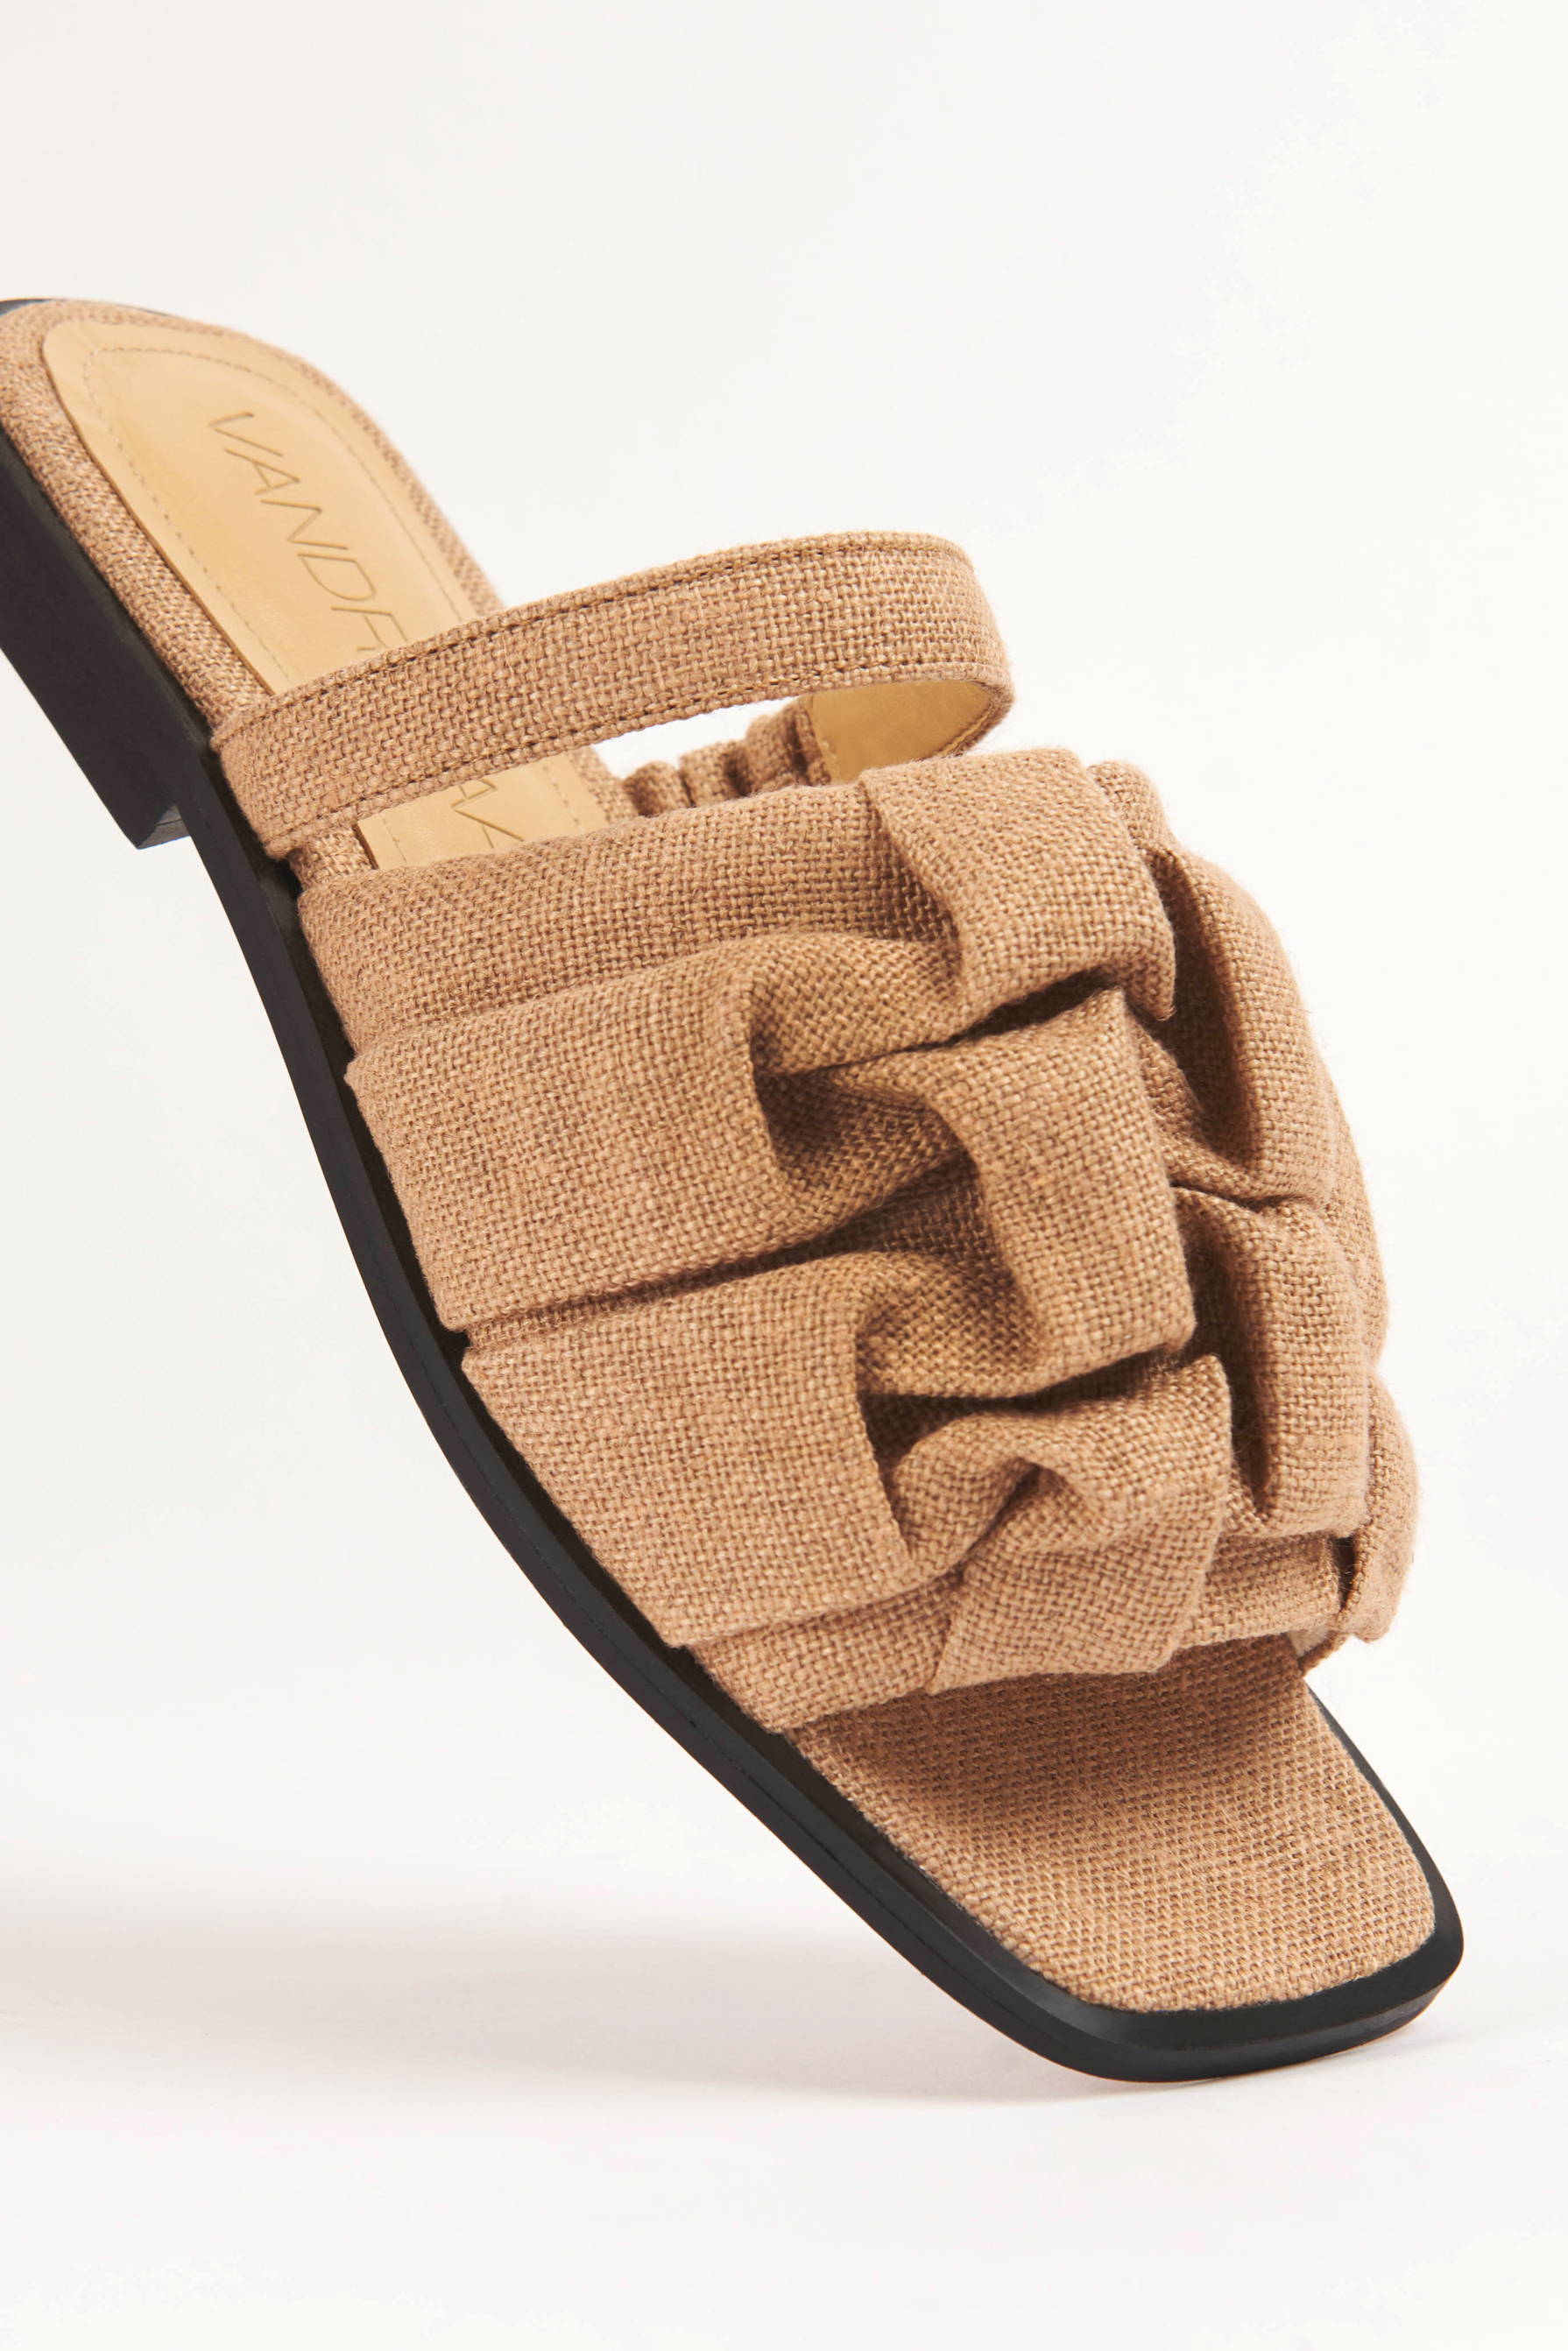 Closeup of Vandrelaar vegan Simone sandal in sandy beige linen featuring canadian smocking detailing and square toe